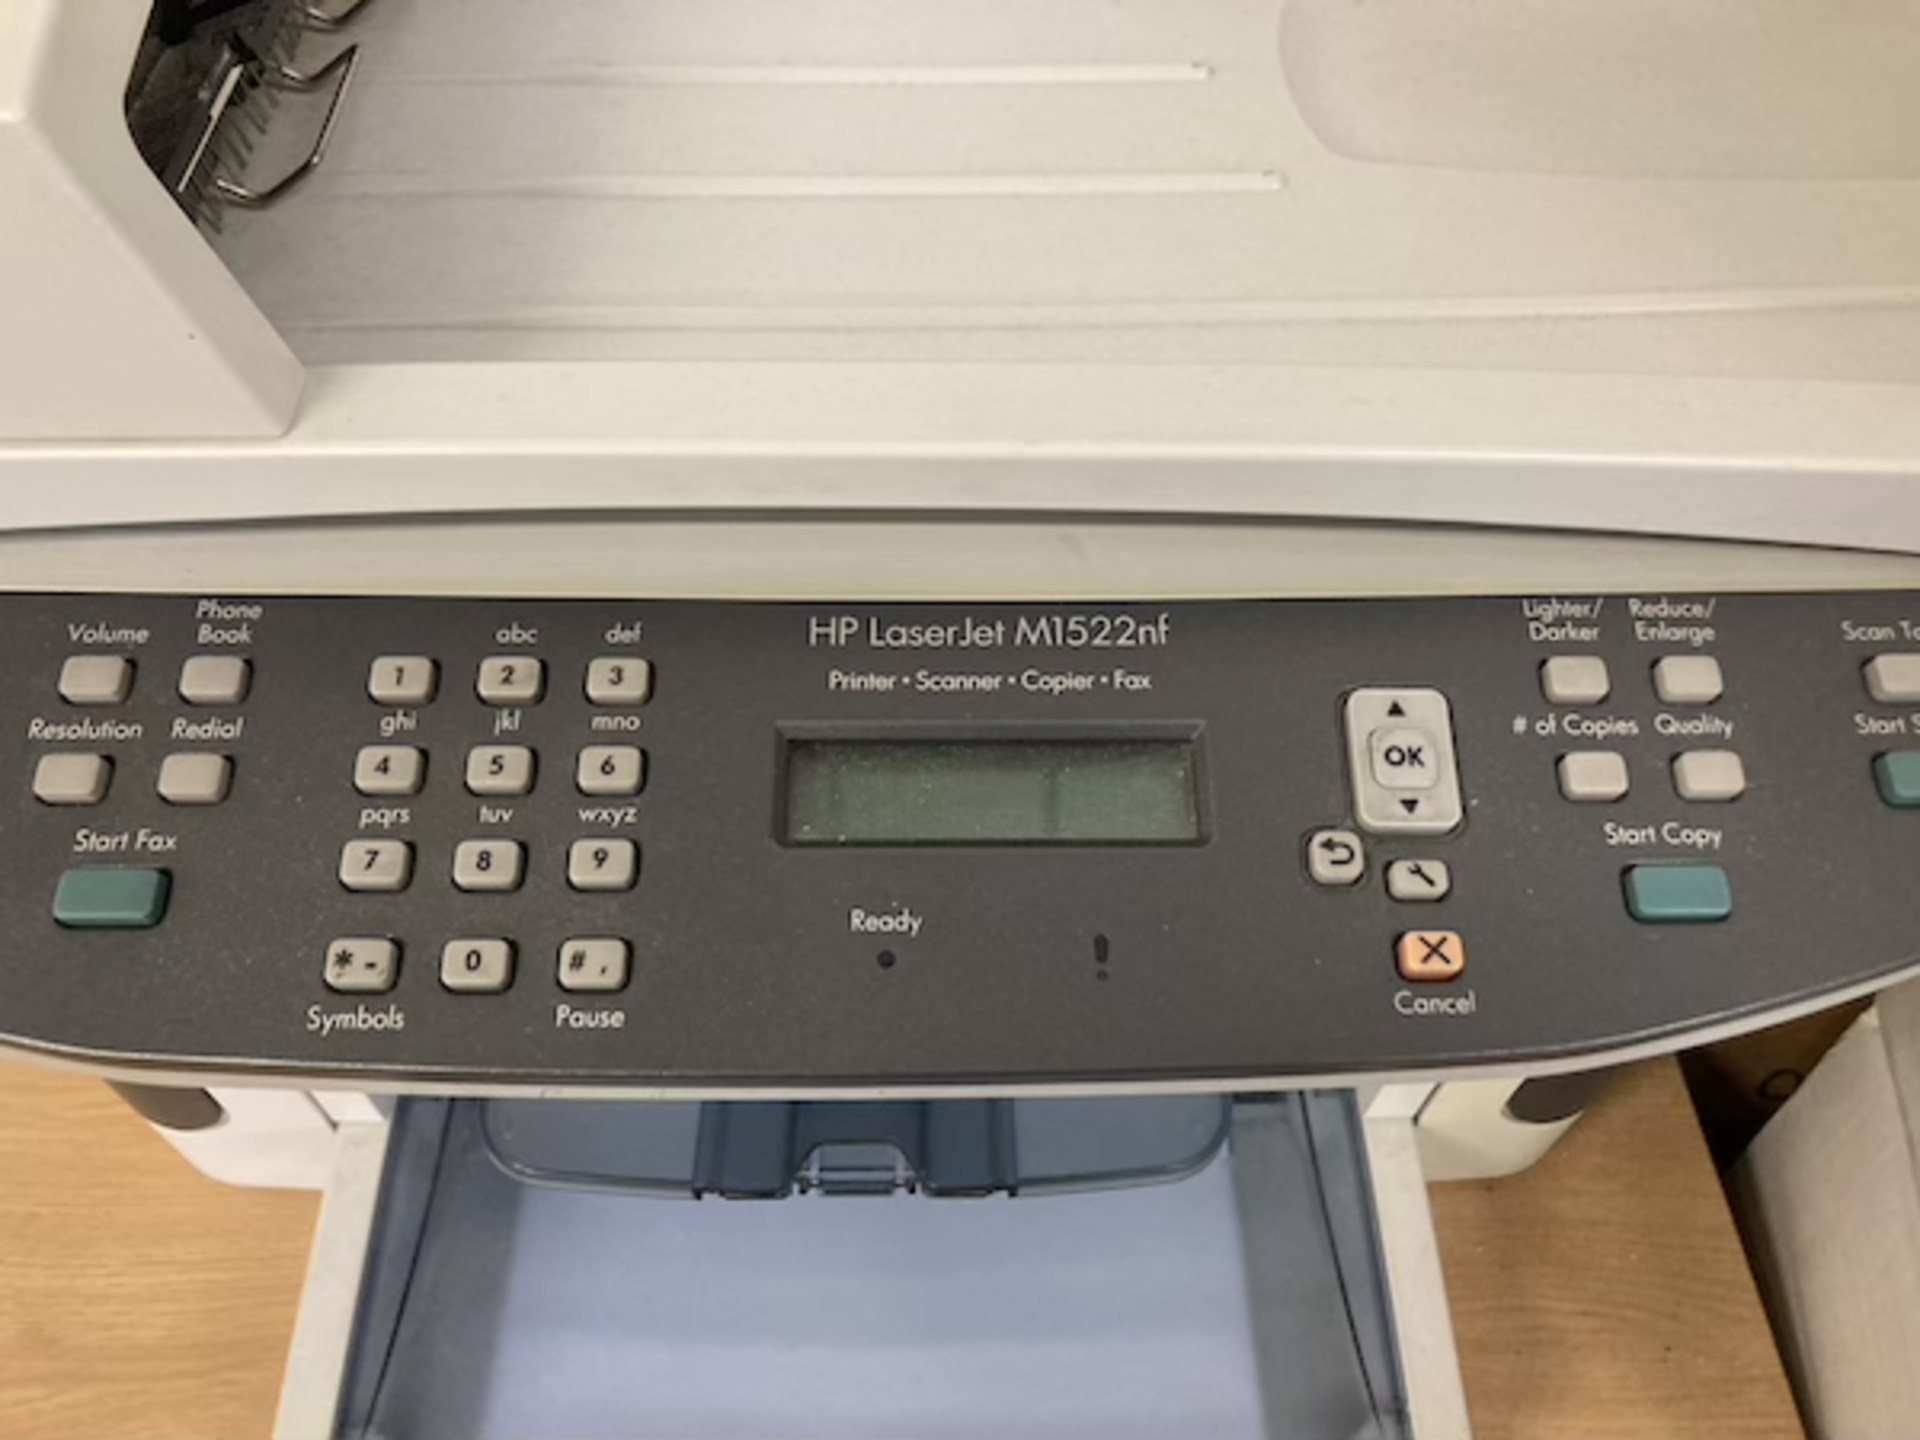 HP LaserJet M1522nf multi-function printer - Image 2 of 3